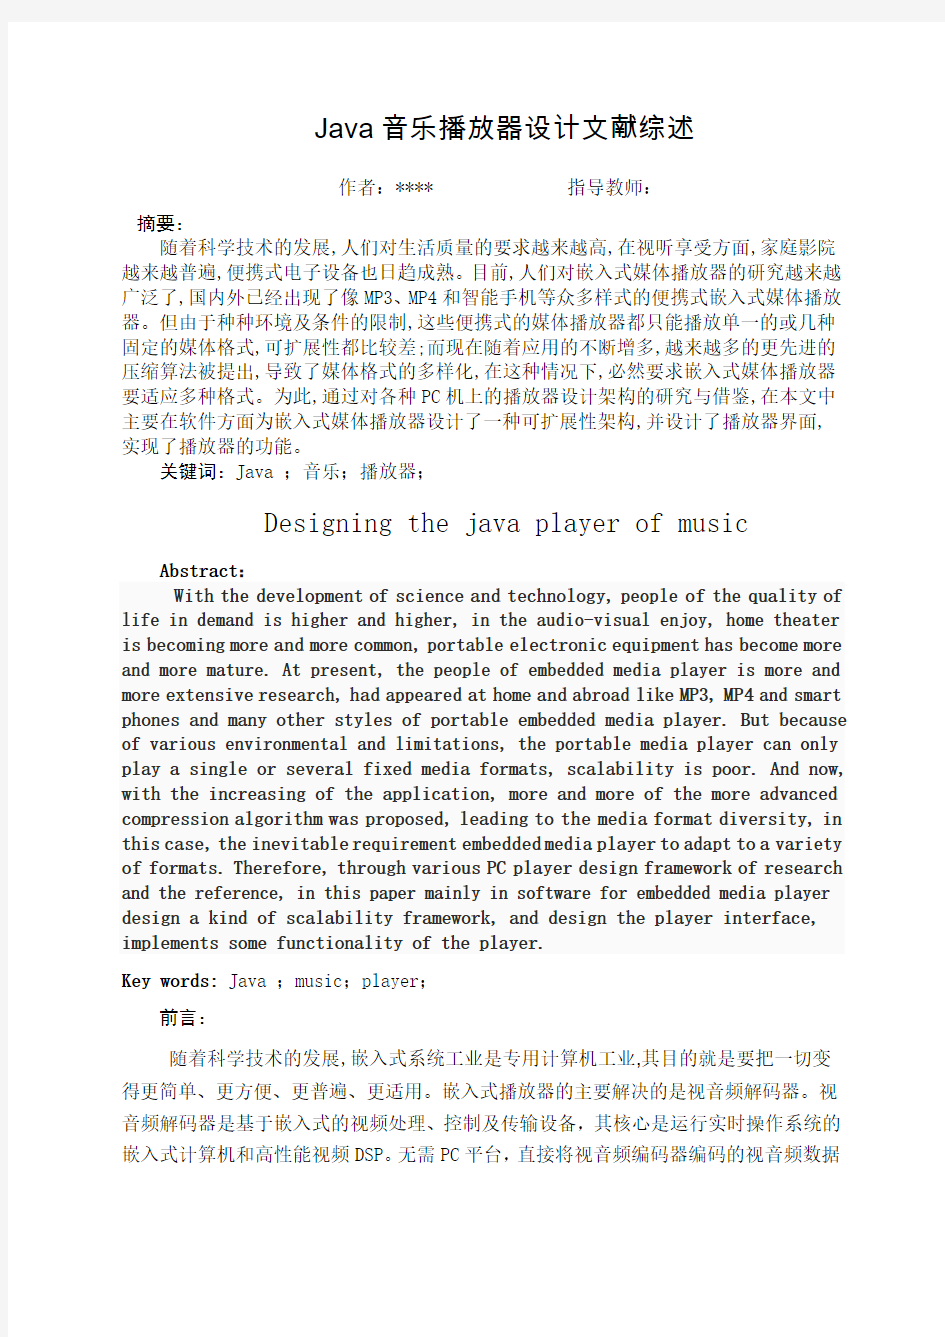 Java音乐播放器设计文献综述